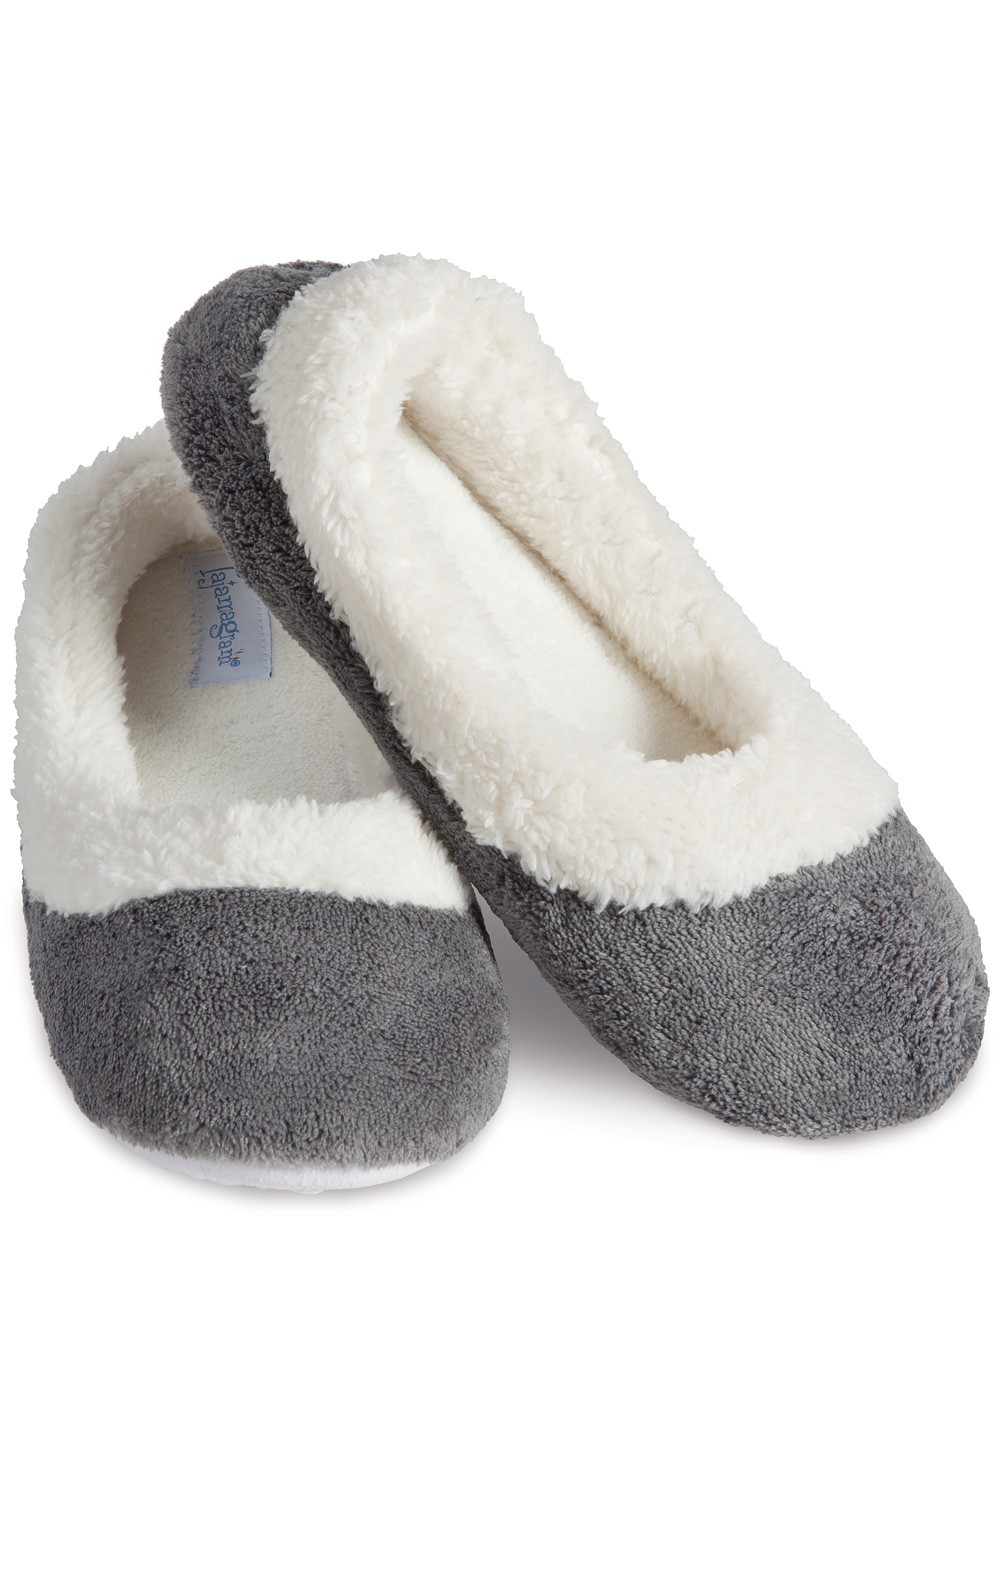 World's Softest Slippers - Gray